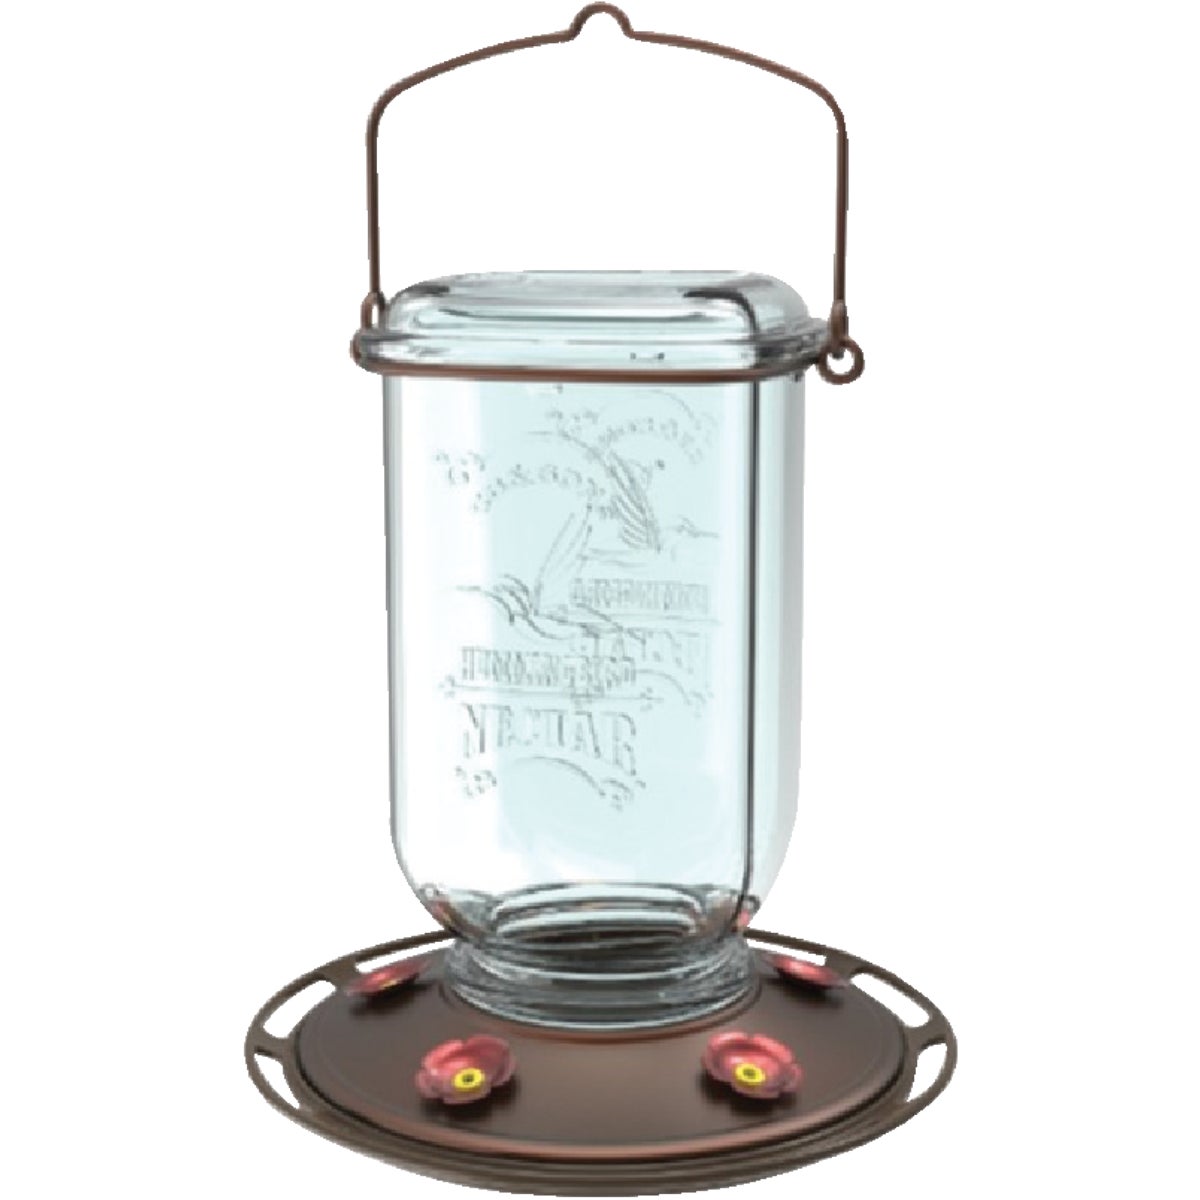 Item 704772, Square glass mason jar has a rustic metal finish and 5 integrated metal 